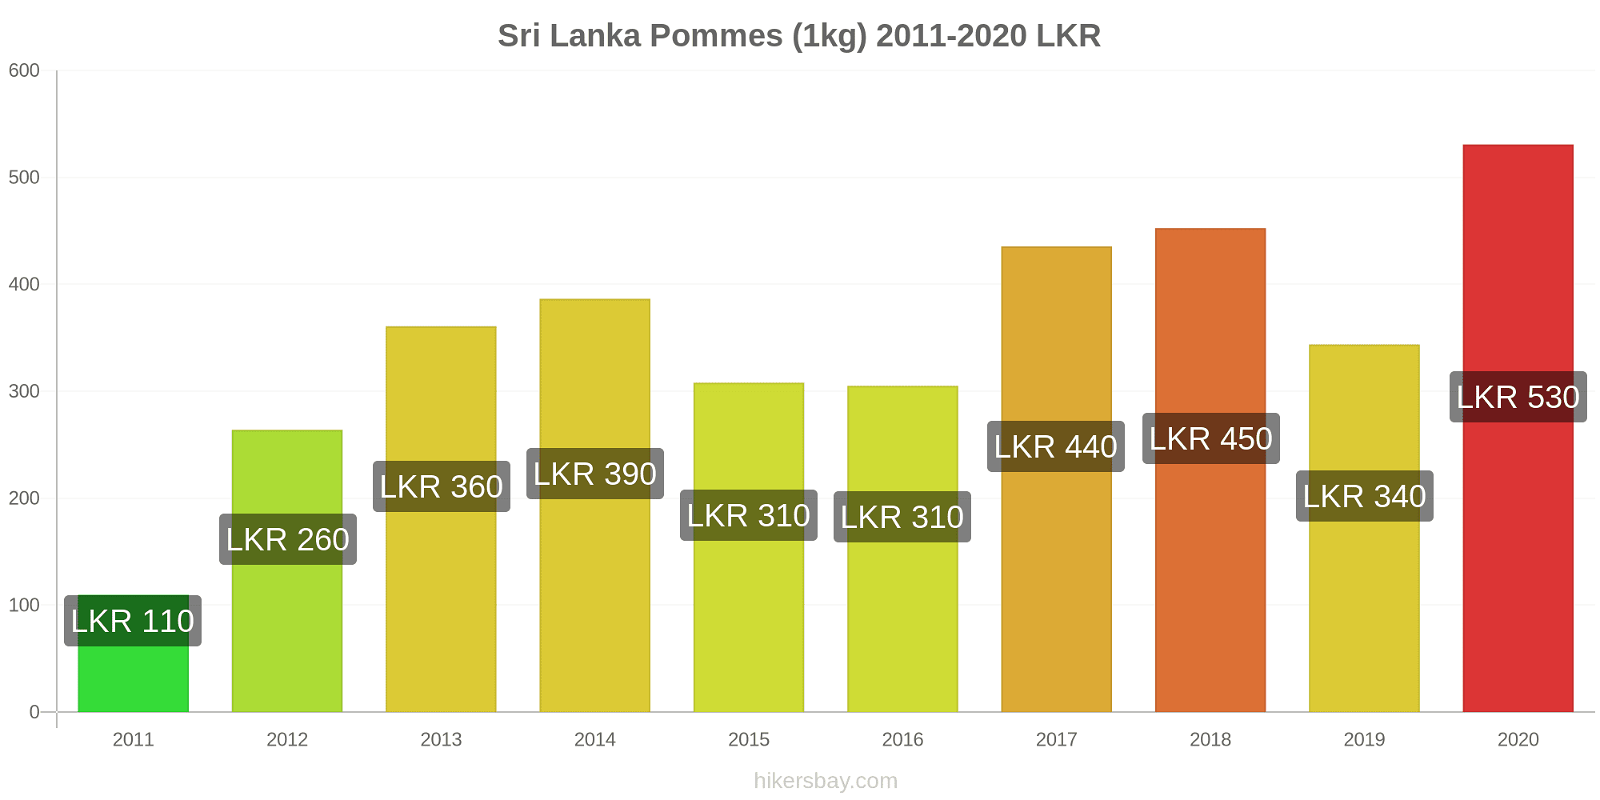 Sri Lanka changements de prix Pommes (1kg) hikersbay.com